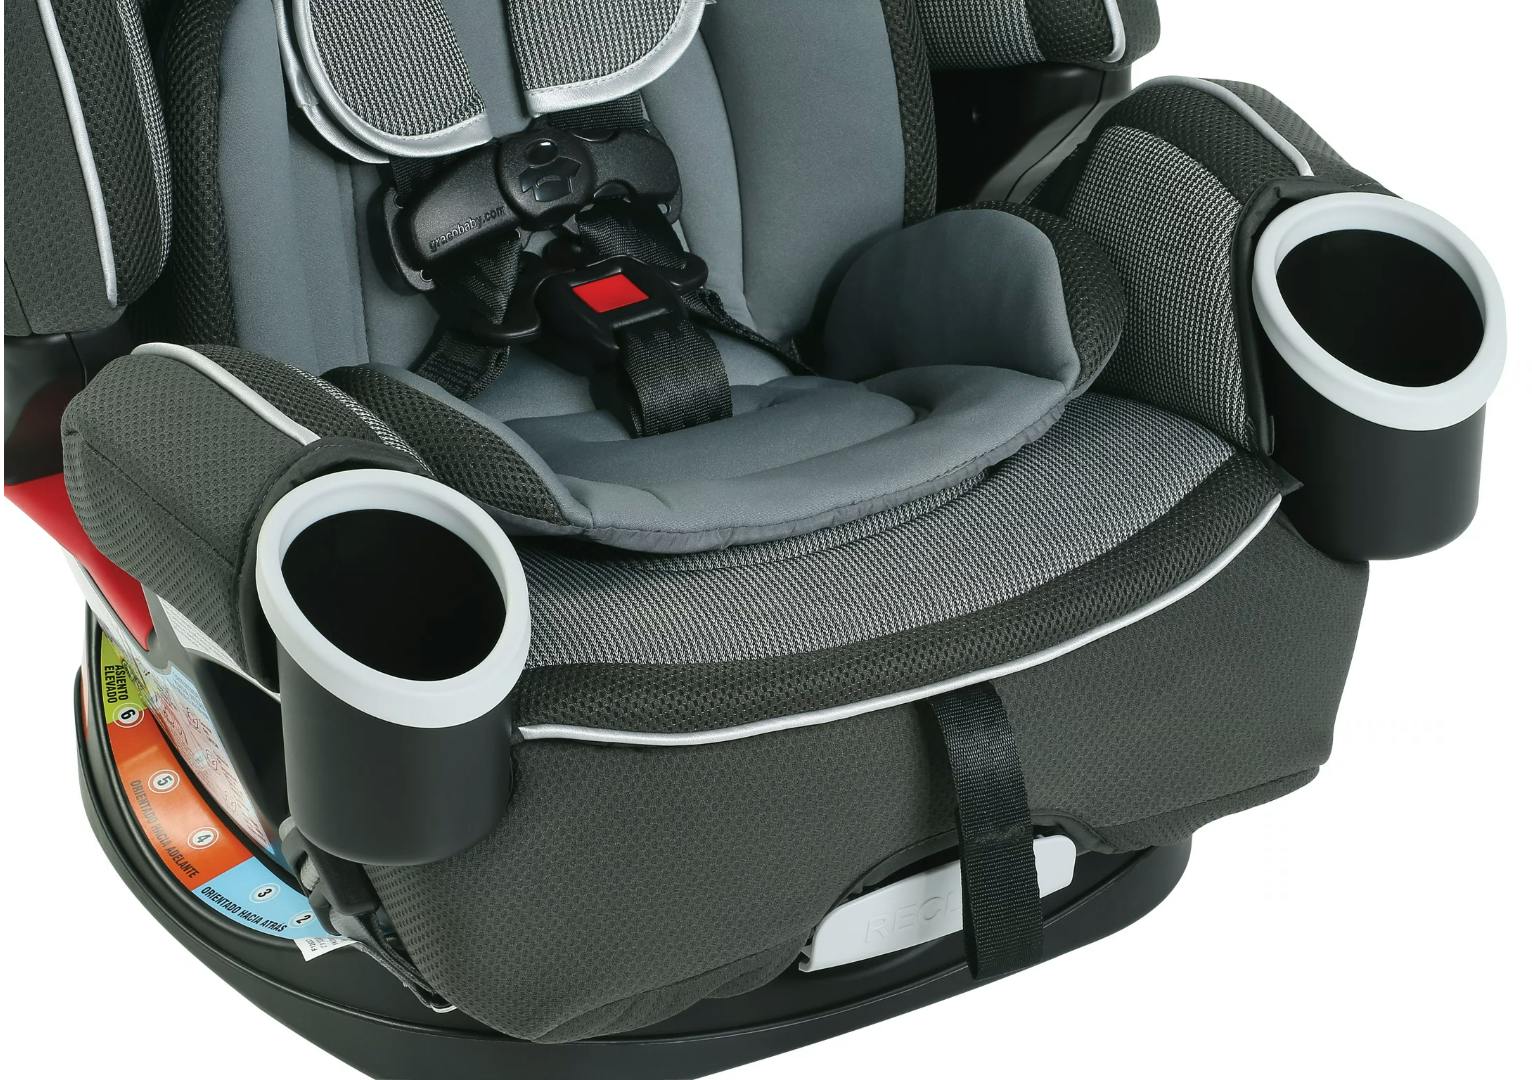 Graco 4Ever® DLX 4-in-1 Car Seat